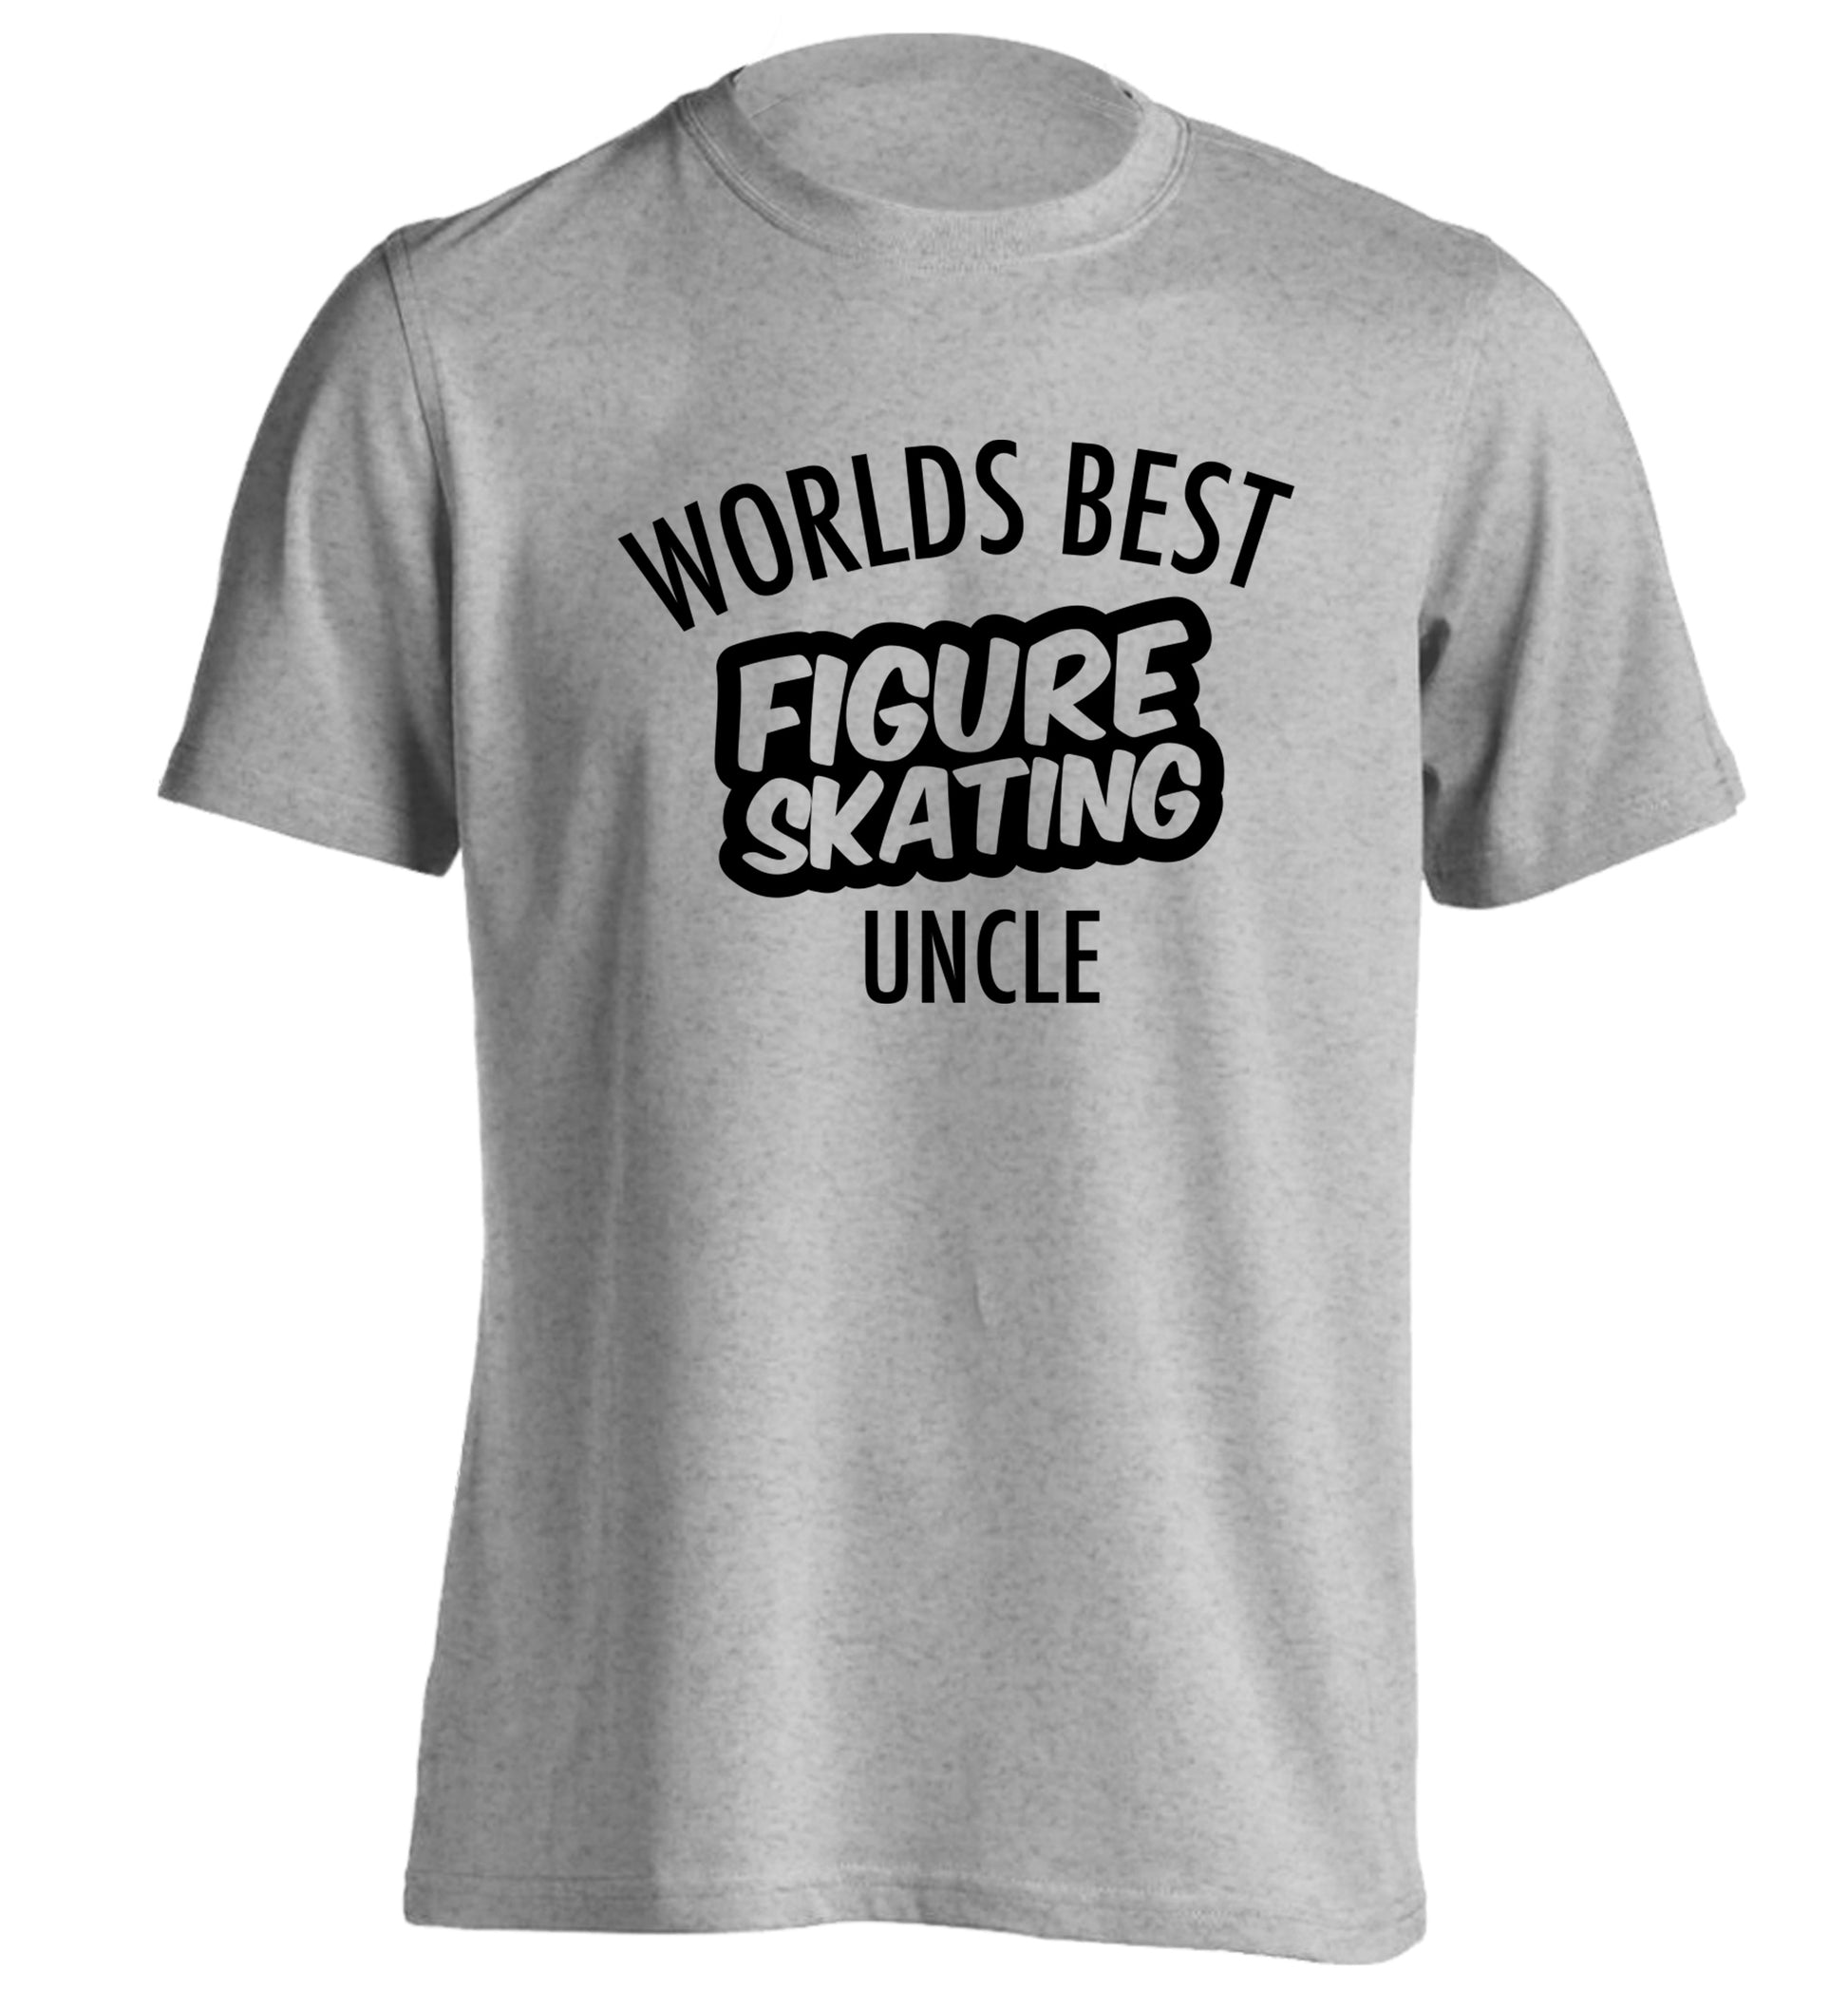 Worlds best figure skating uncle adults unisexgrey Tshirt 2XL